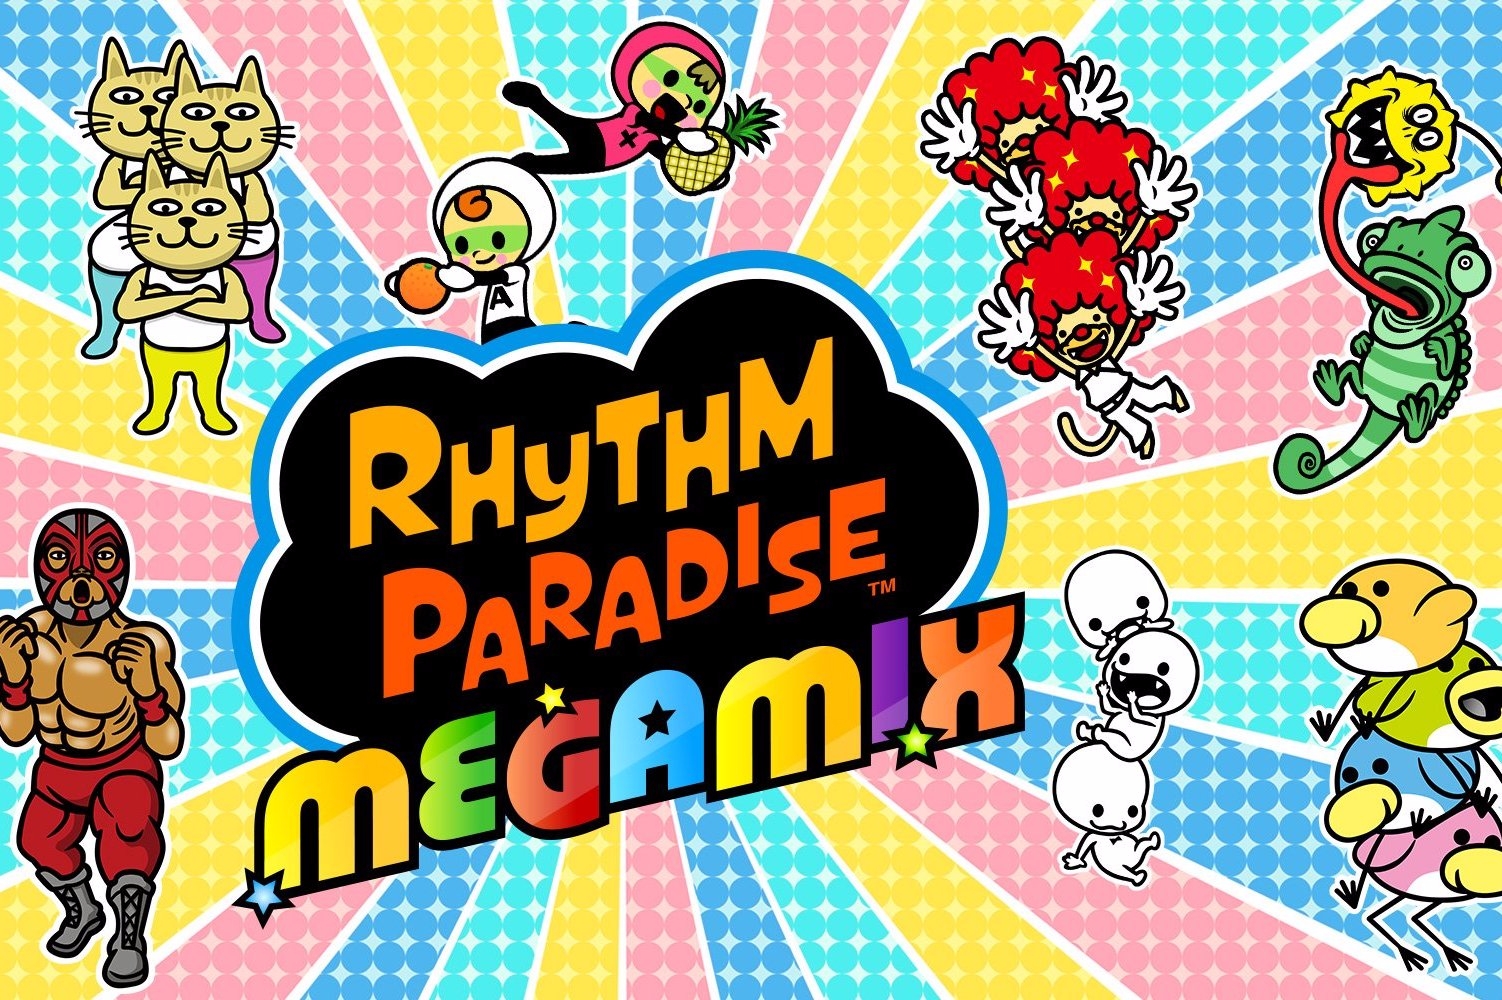 rhythm heaven megamix download rom